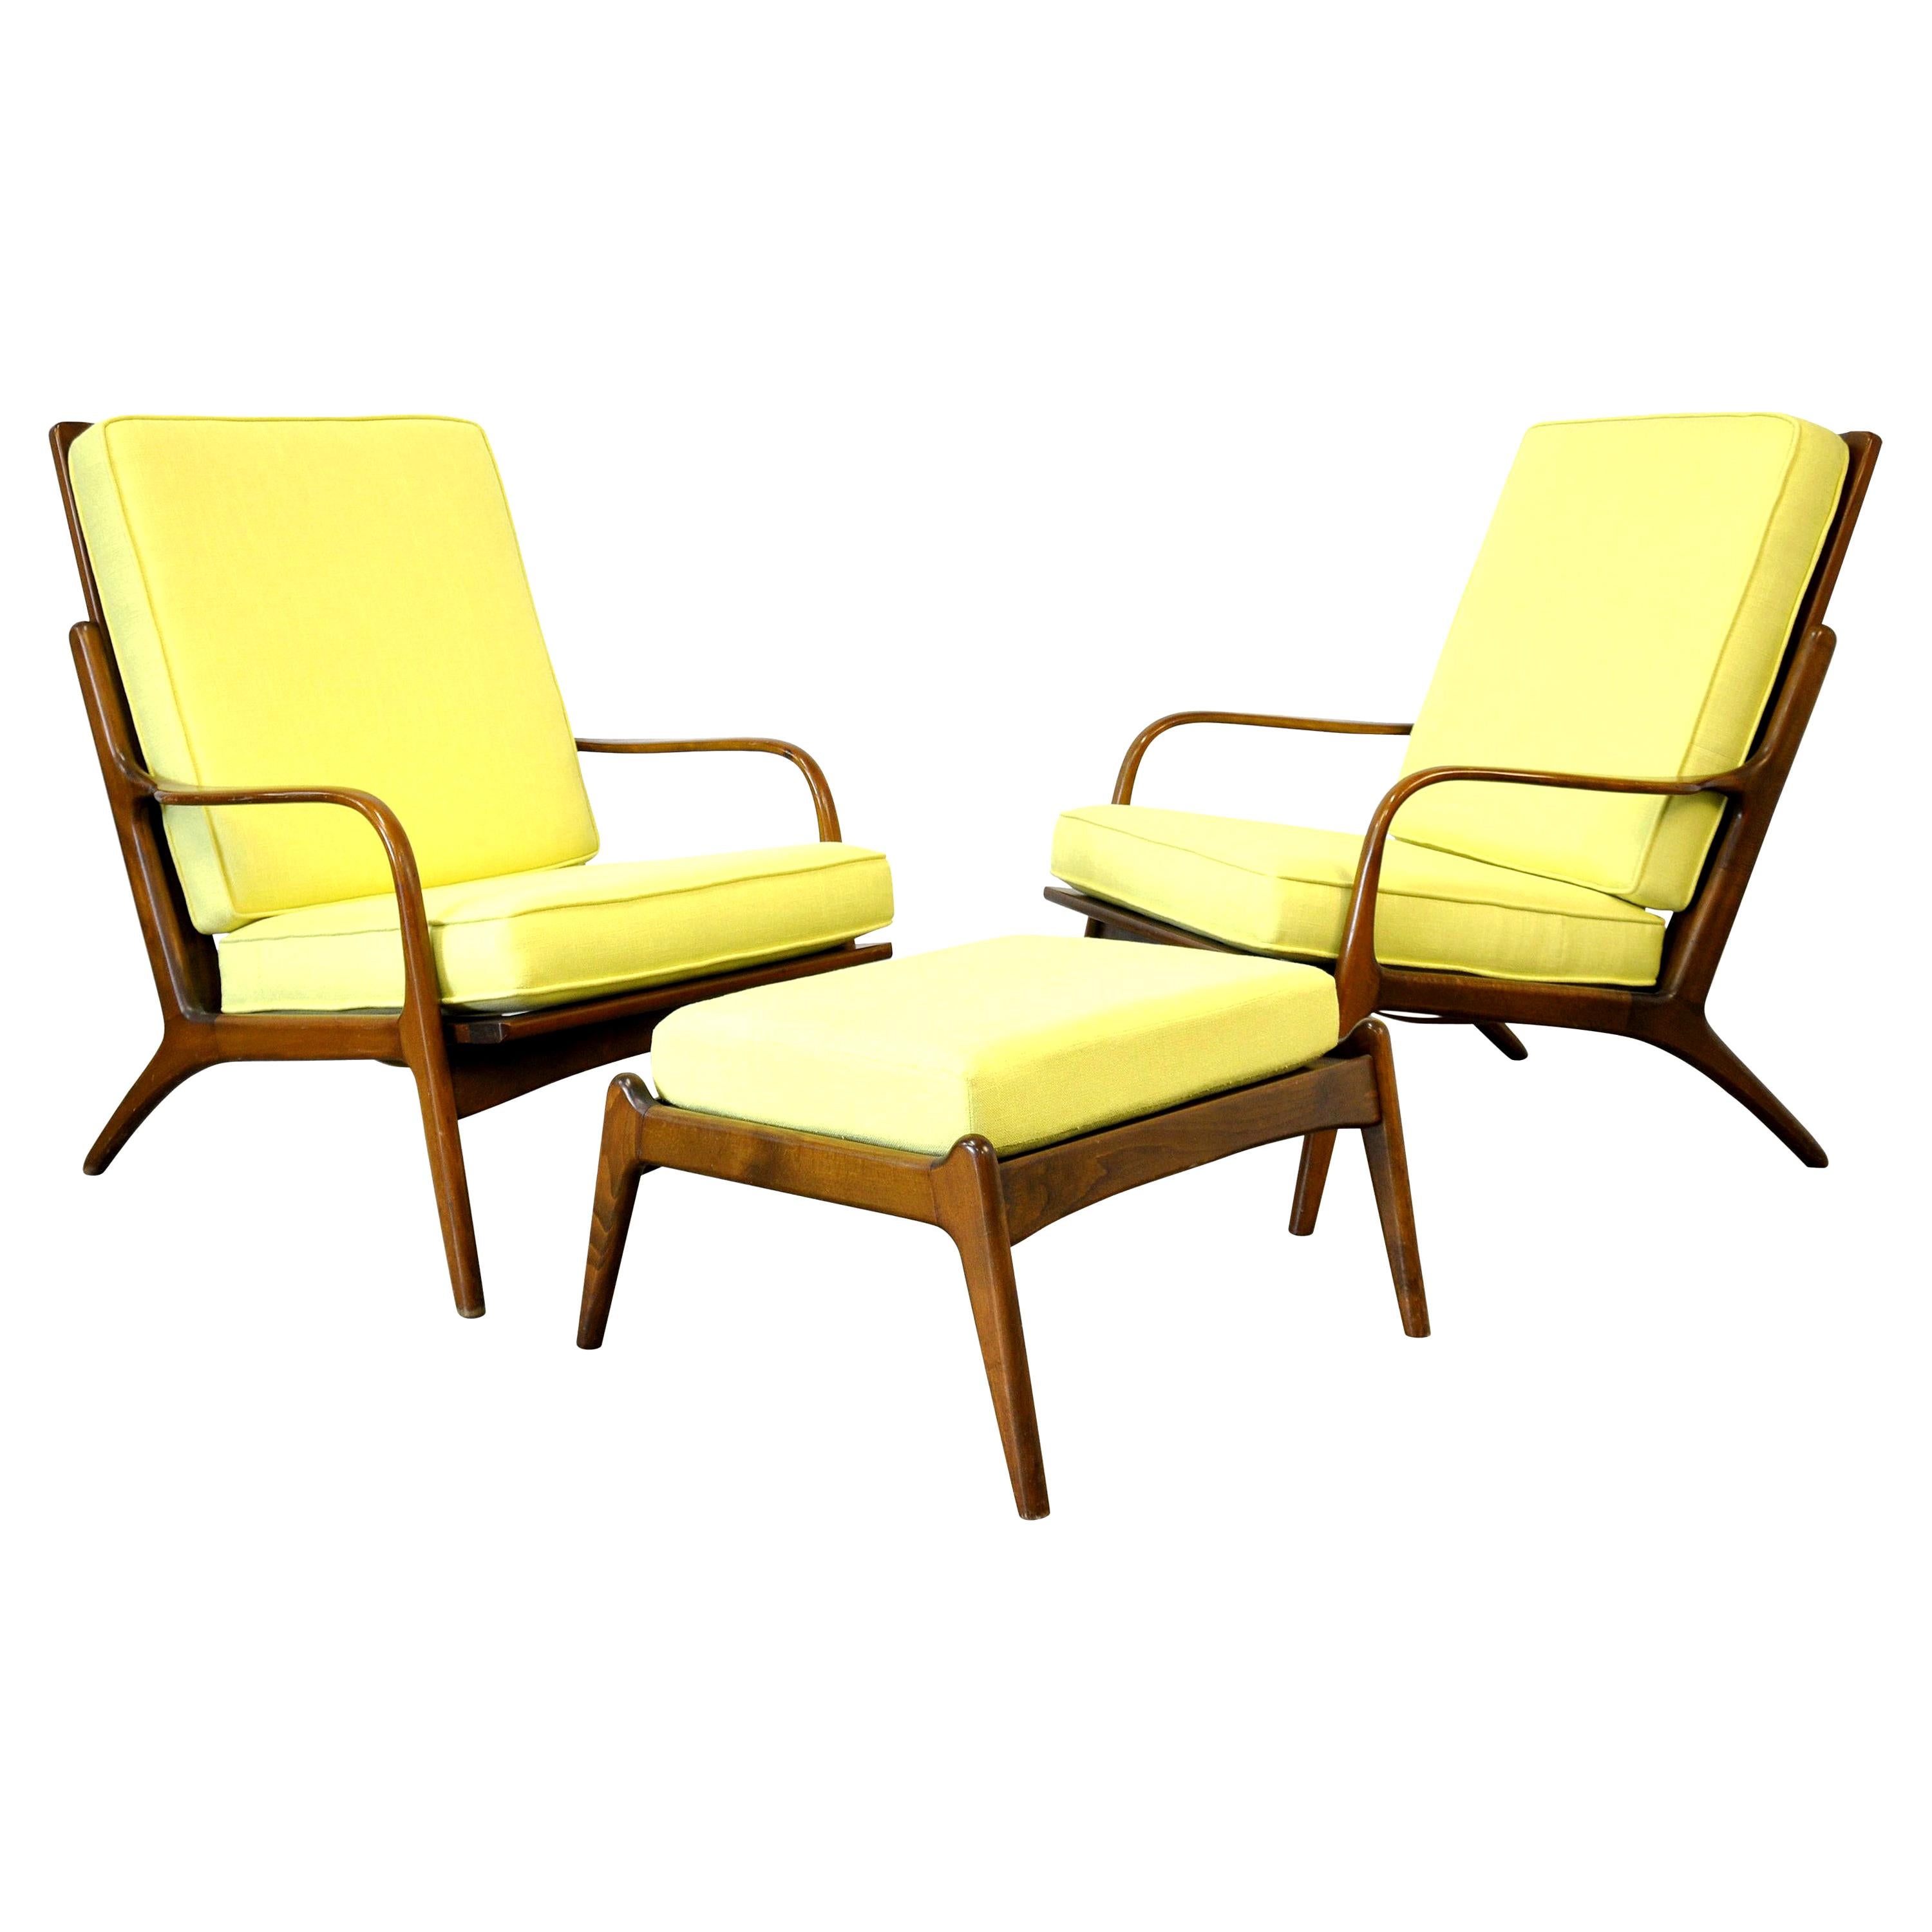 Pair of Danish Mid-Century Modern Yellow Lounge Chairs and Ottoman